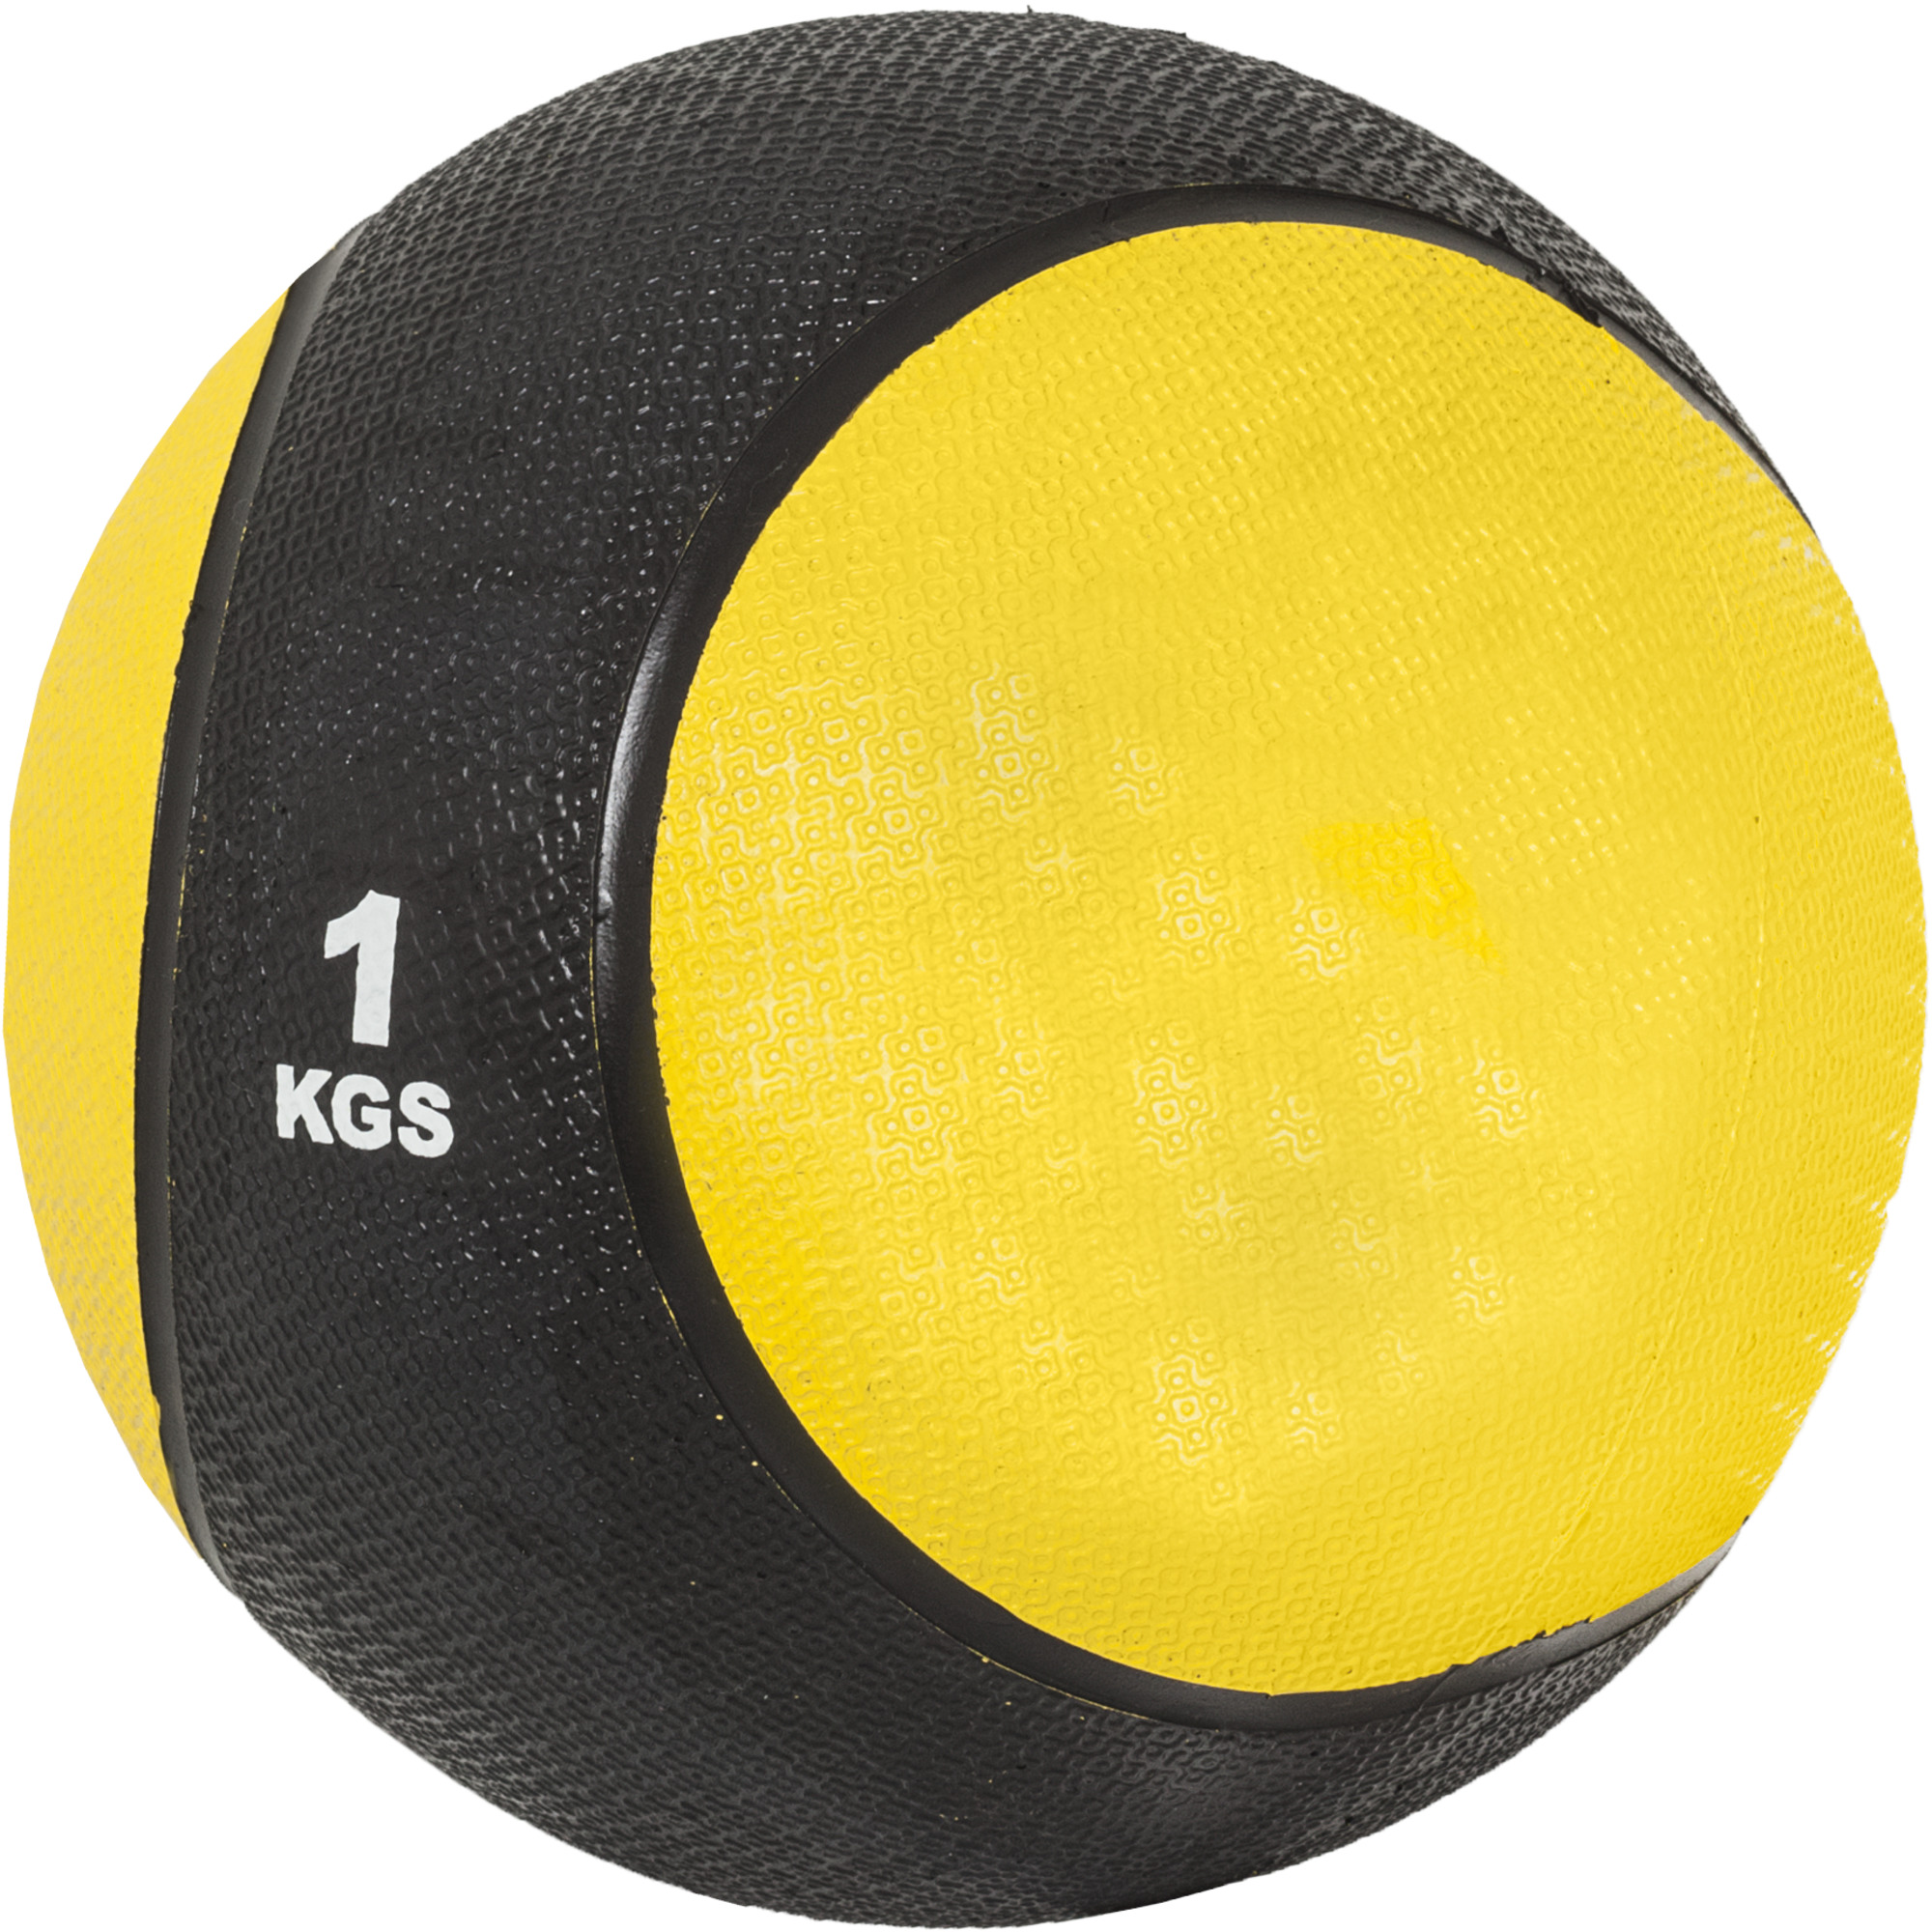 MÃ©decine ball de 1 KG - jaune/noir - ballon de musculation